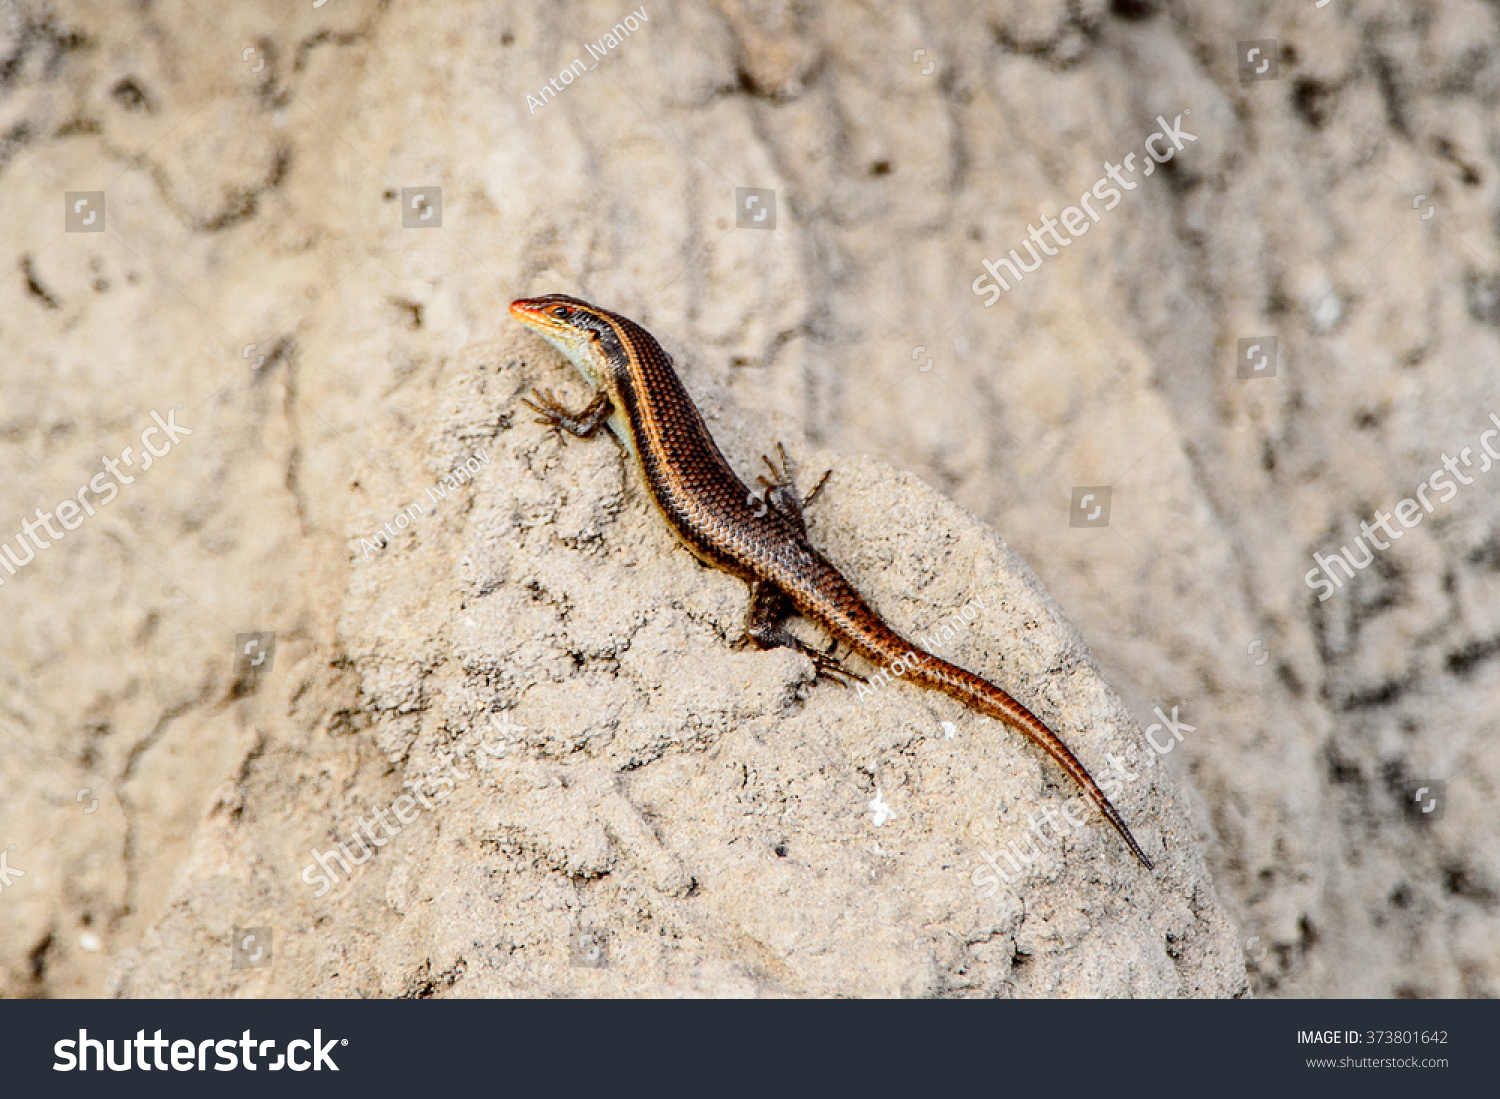 Little lizard on the stone at the Moremi Game Reserve (Okavango River Delta), National Park, Botswana #373801642